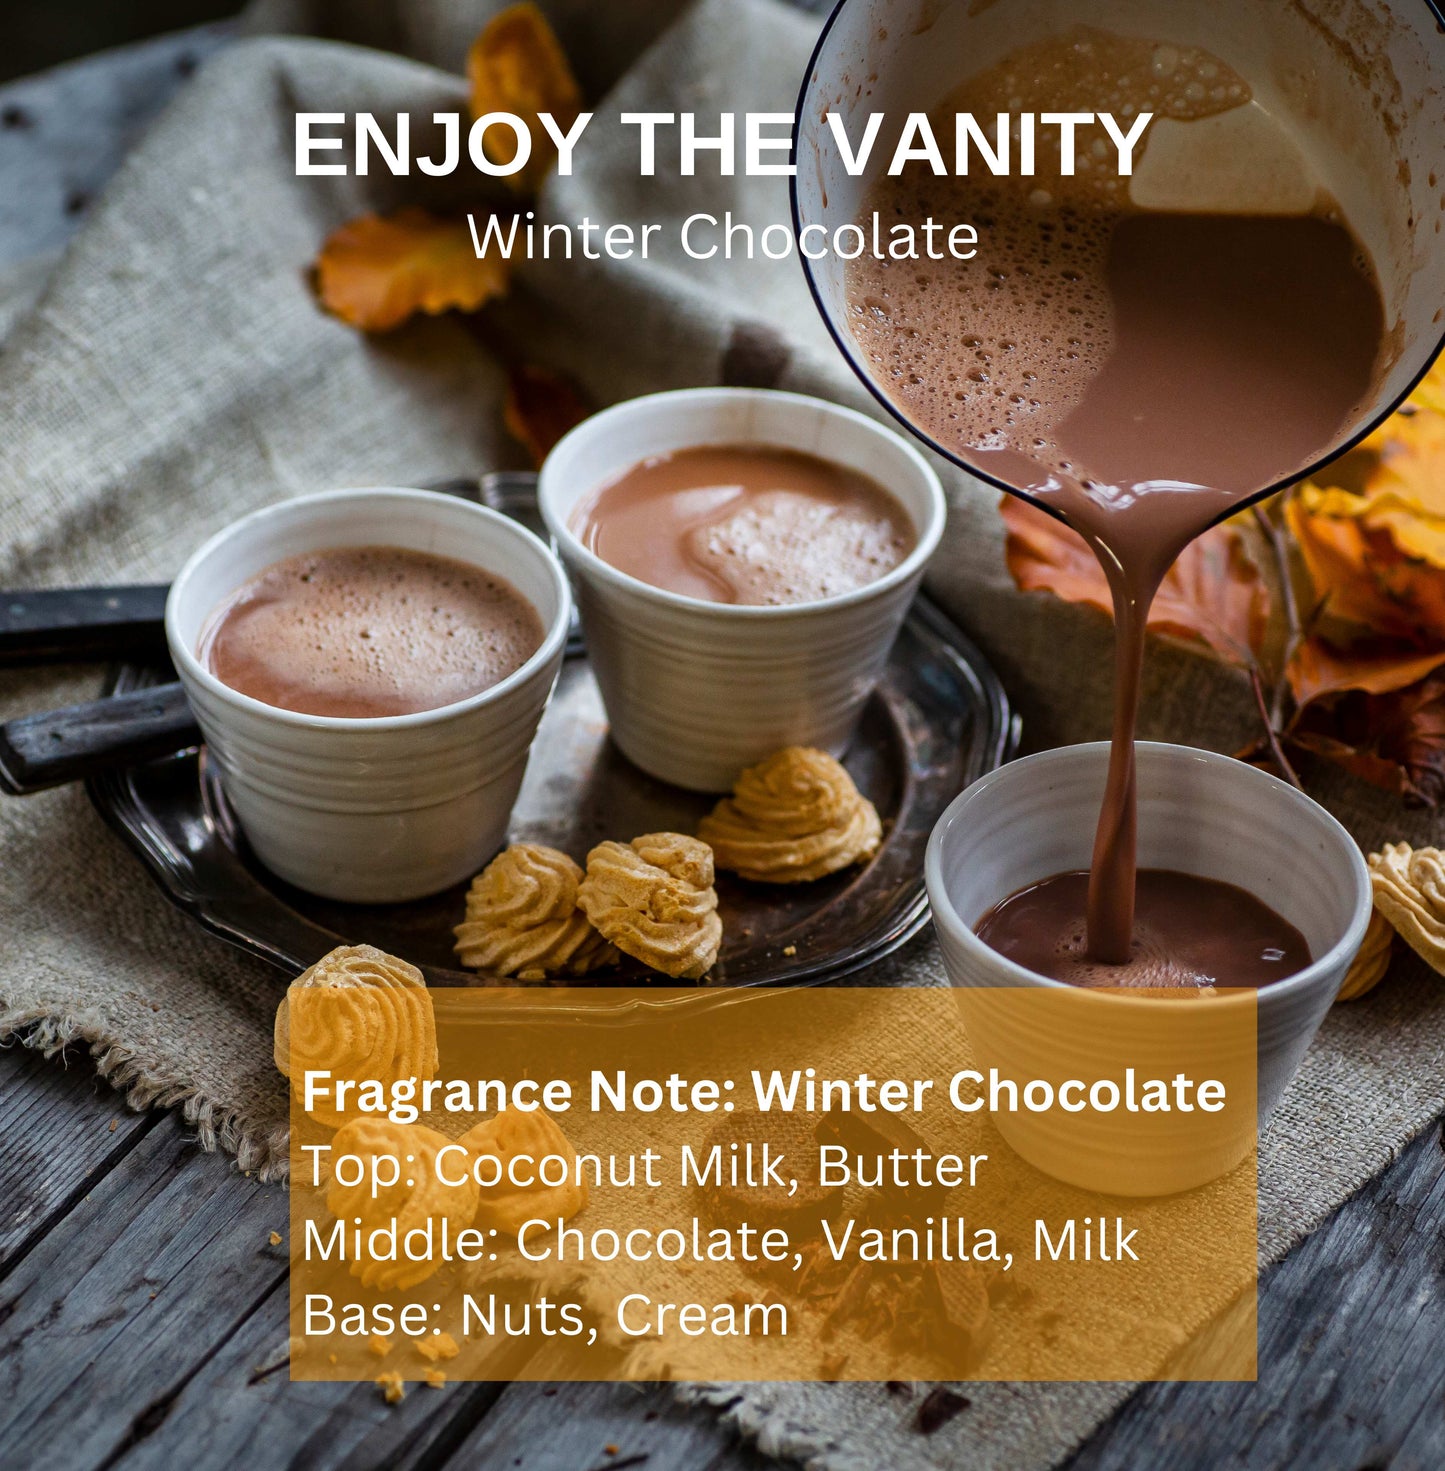 ENJOY THE VANITY - WINTER CHOCOLATE